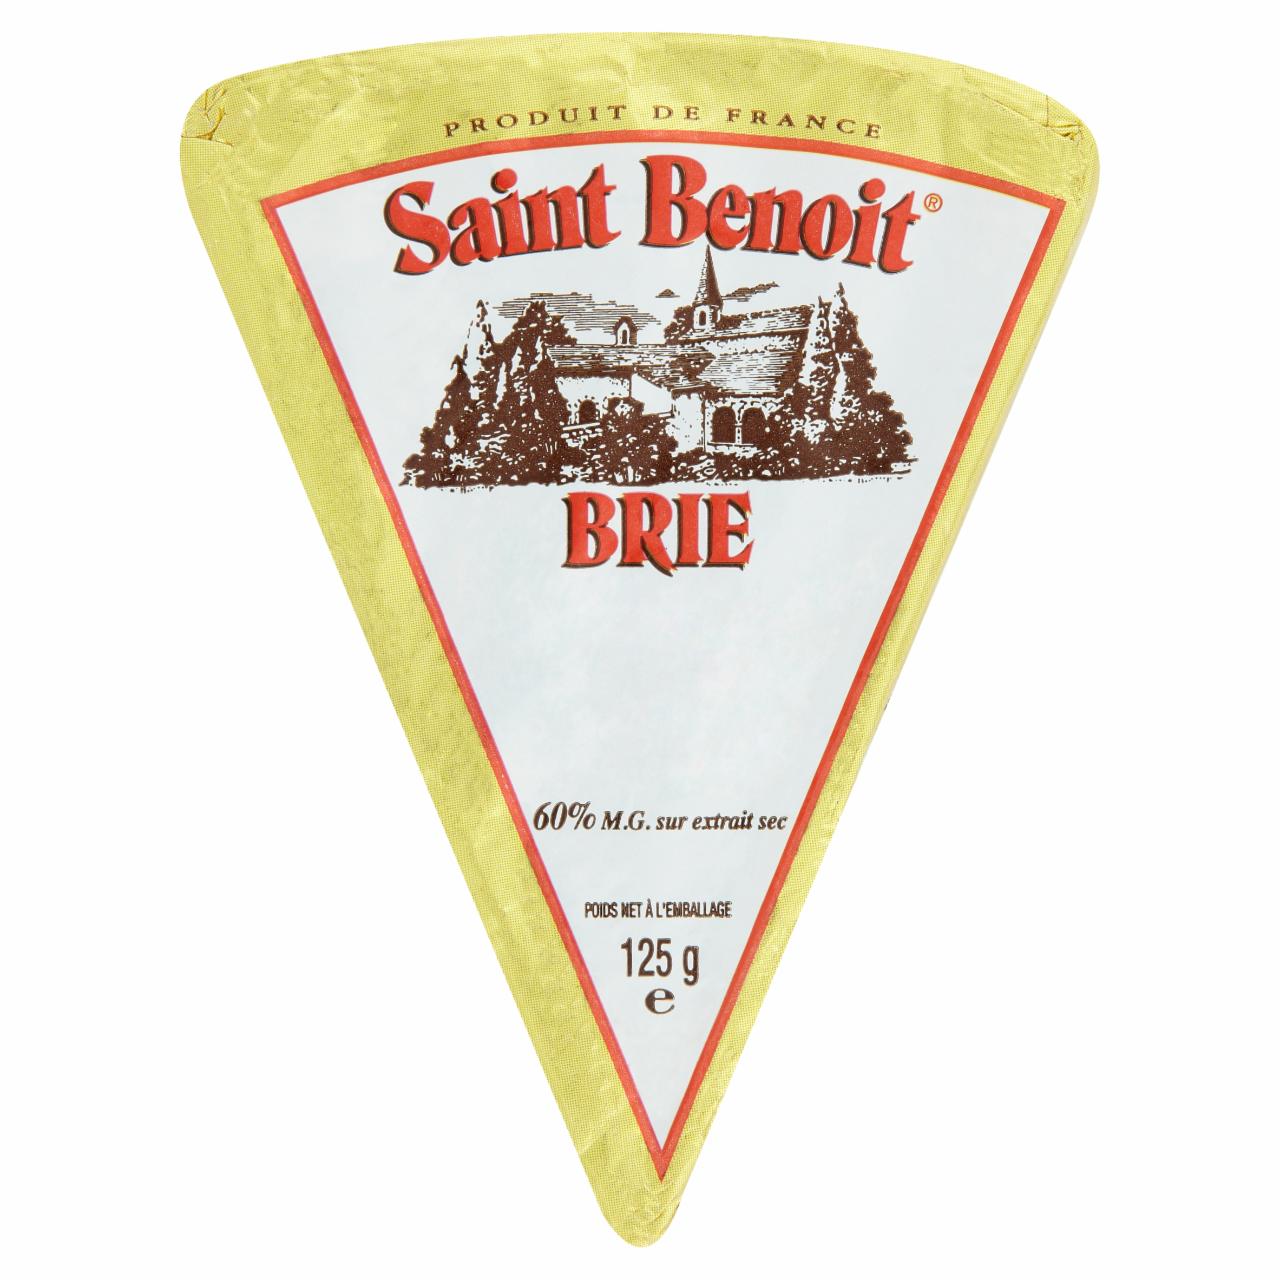 Képek - Saint Benoit brie sajt 125 g